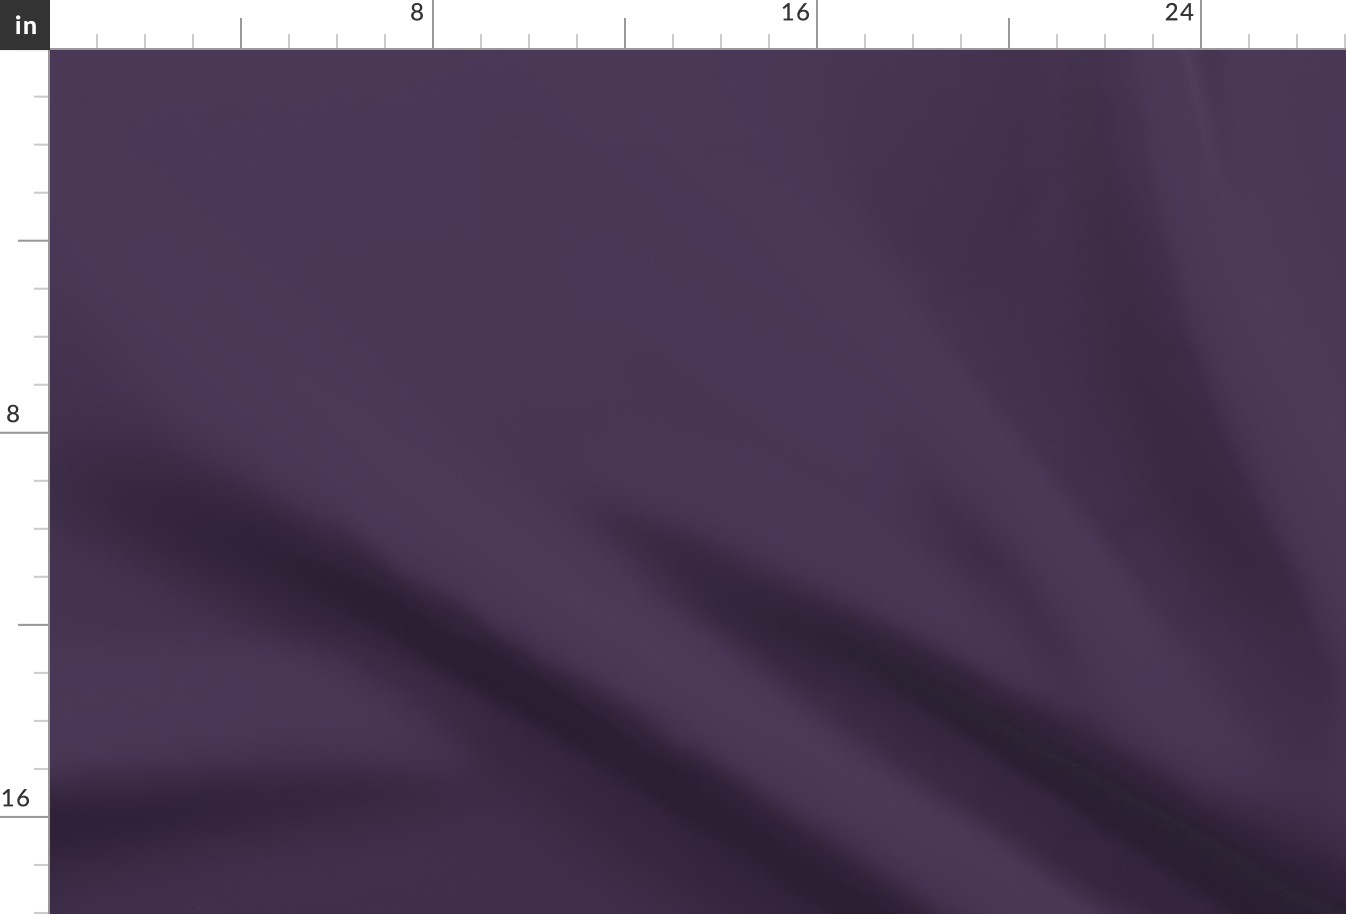 Plum Purple solid